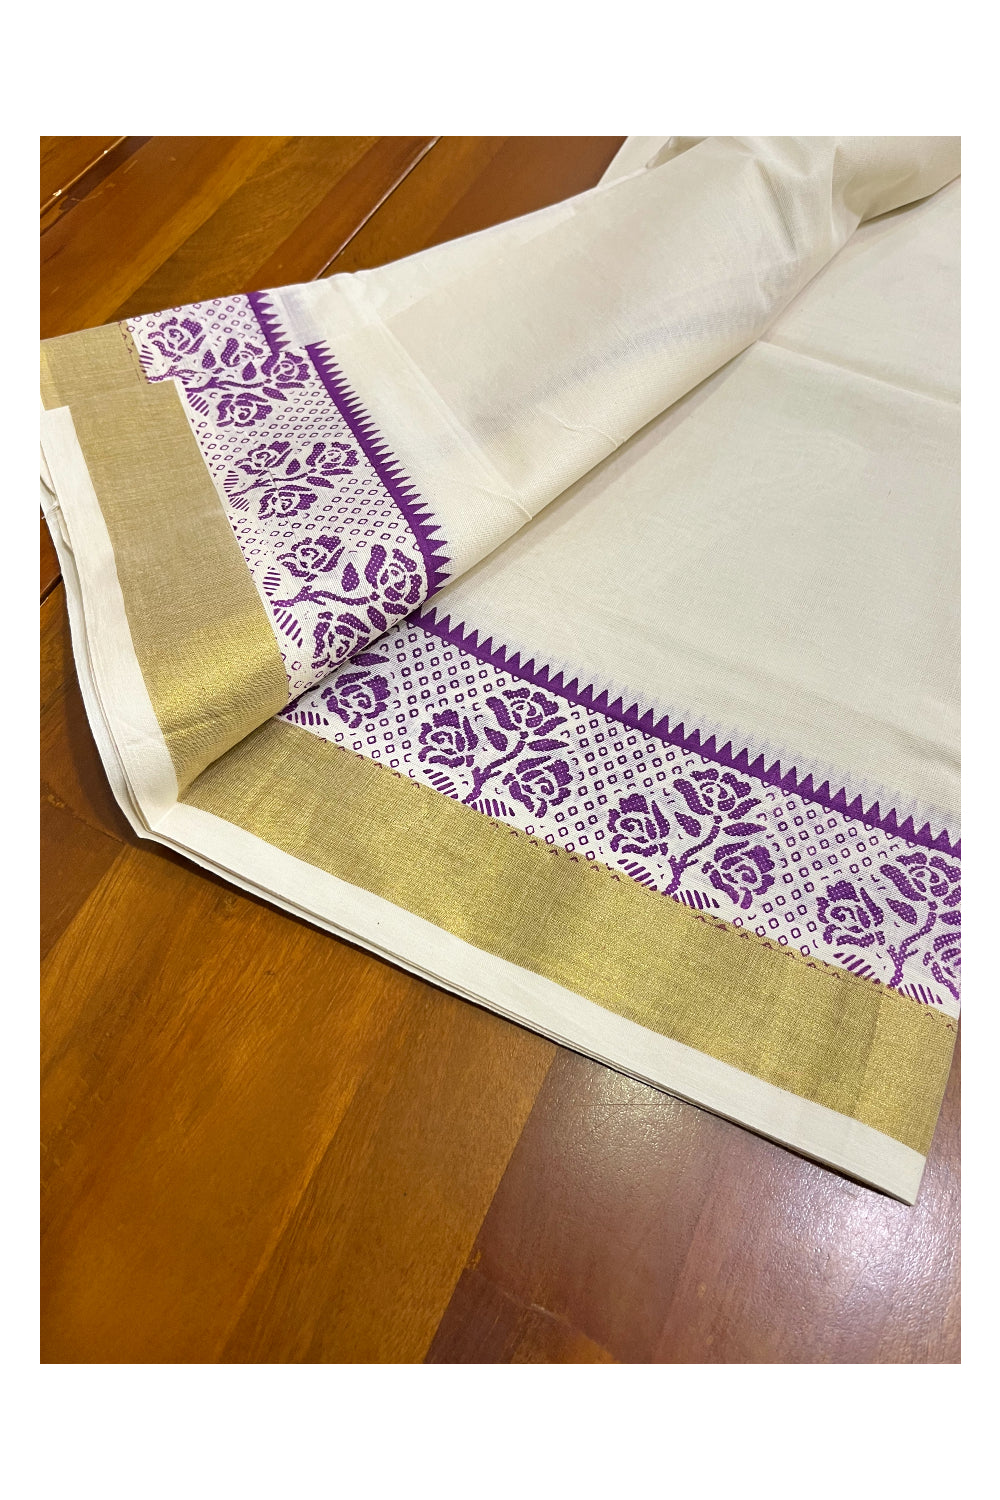 Kerala Cotton Single Set Mundu (Mundum Neriyathum) with Violet Block Prints and Kasavu Border - 2.80Mtrs